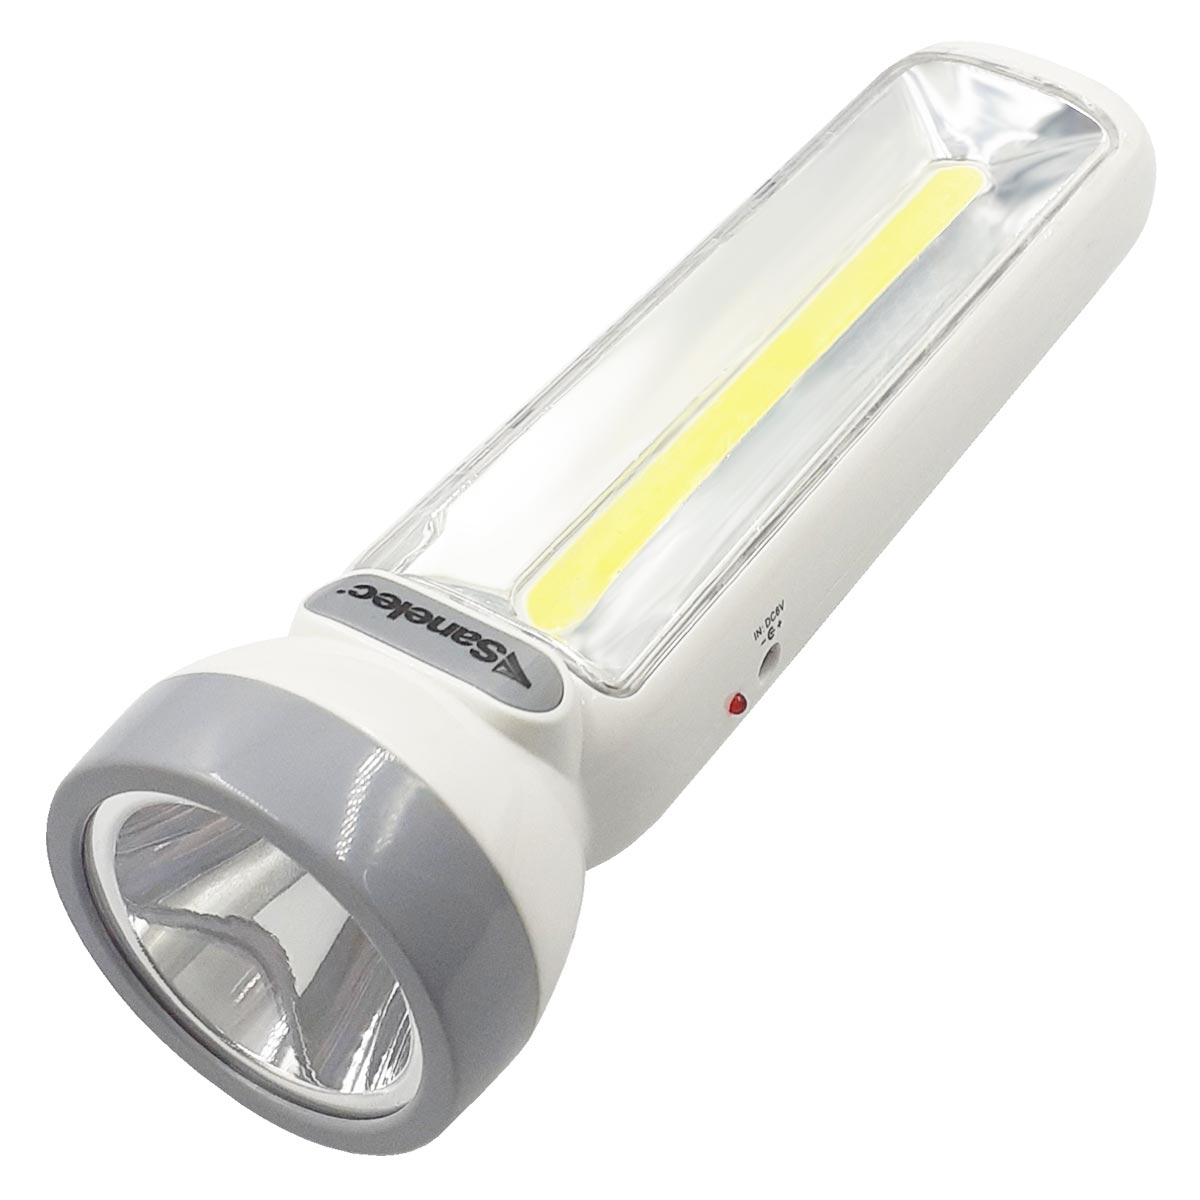 Una linterna LED recargable de largo alcance lateral Fotografía de stock -  Alamy